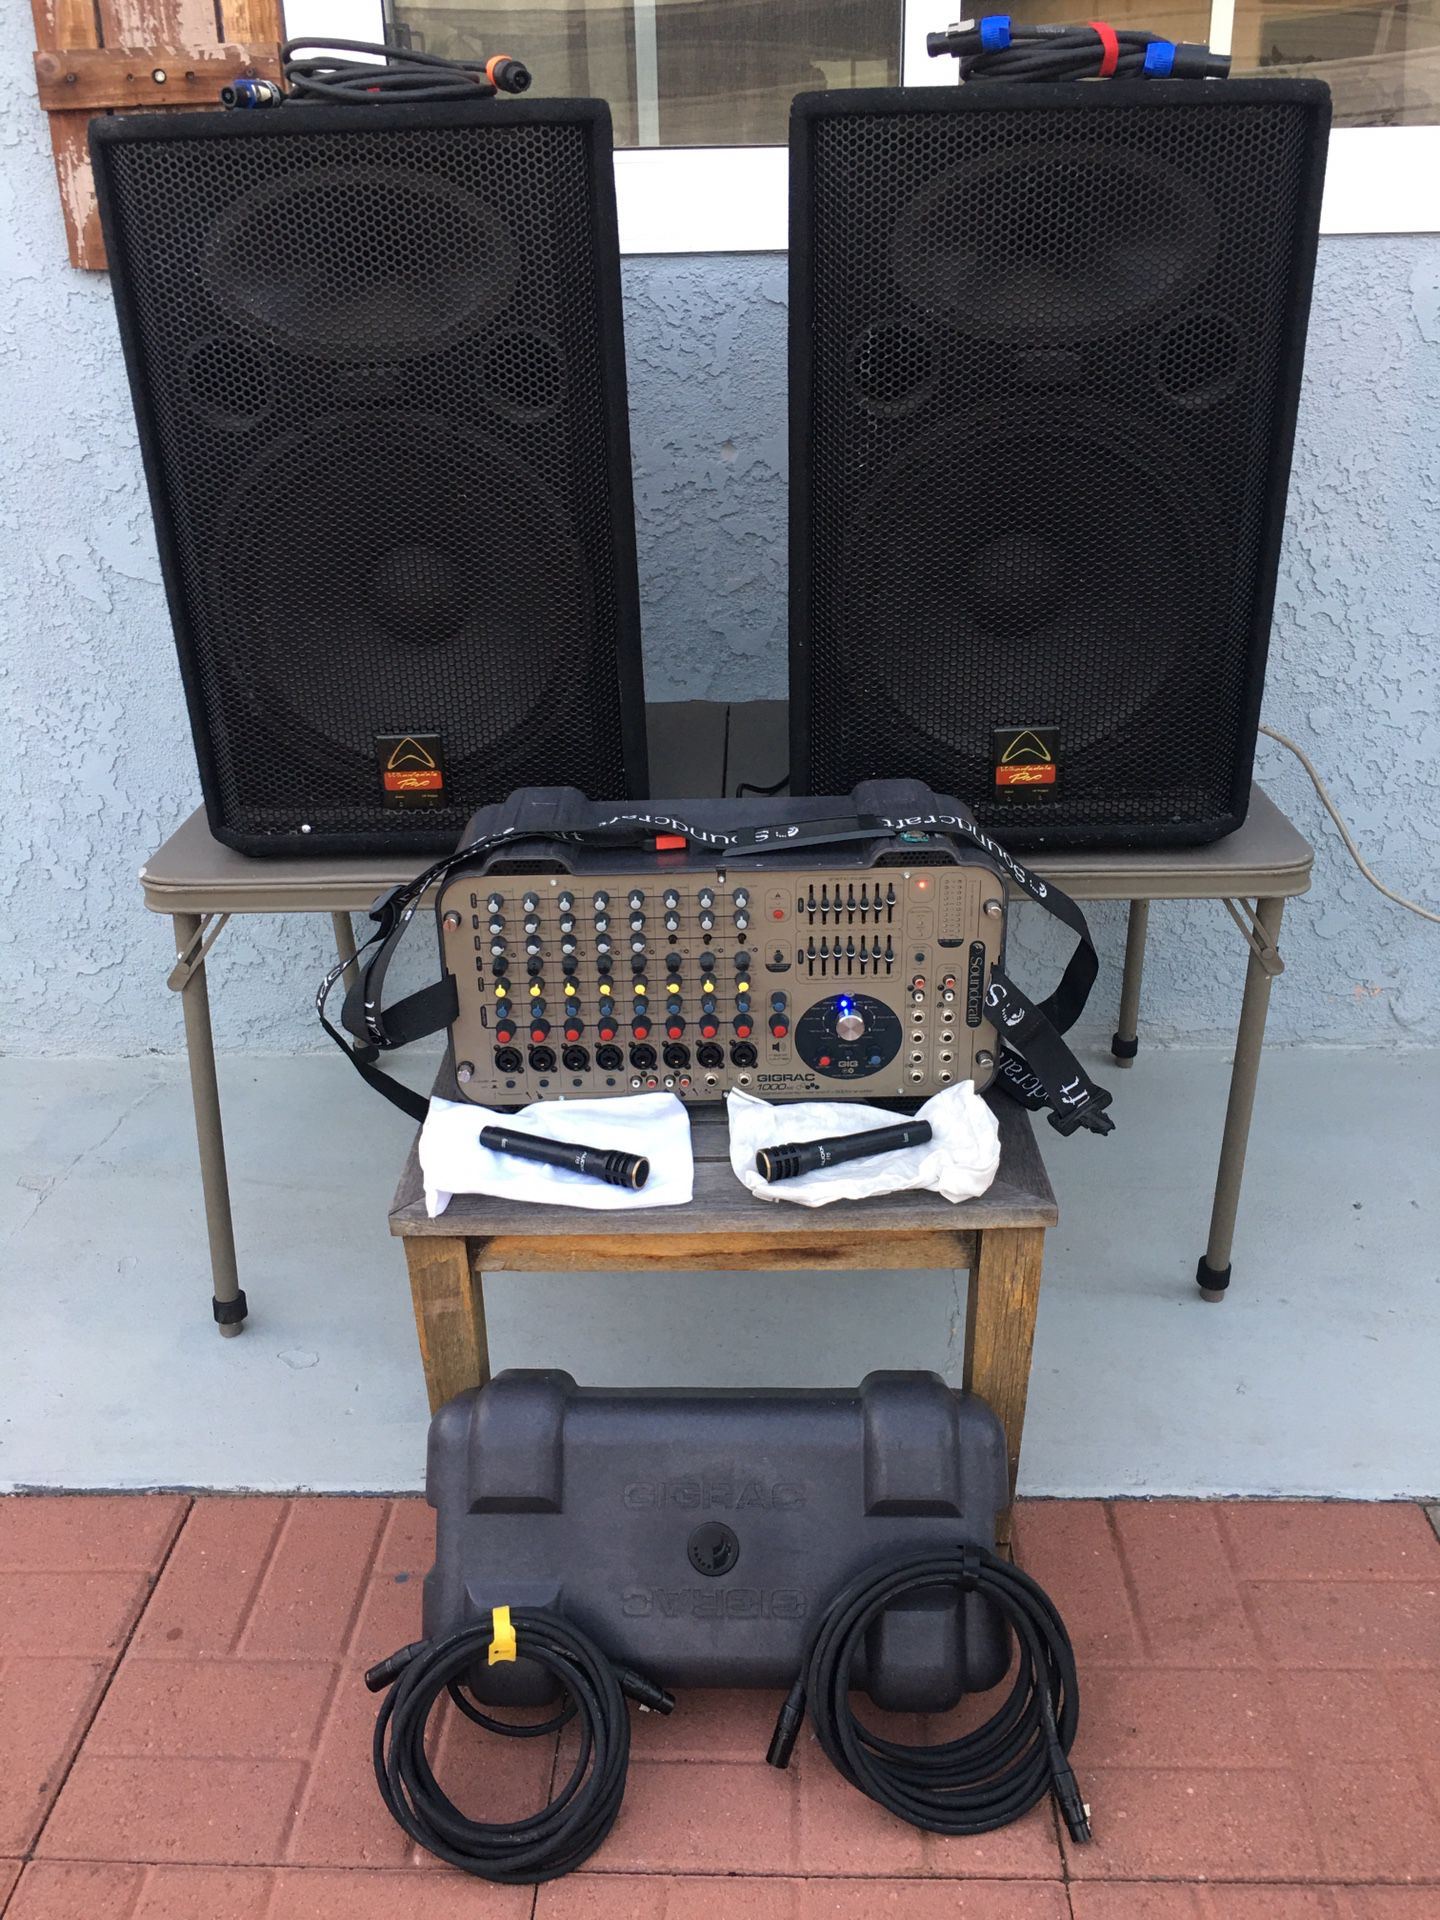 GIGRAC Soundcraft Powered Mixer 1000 Watts Wharfedale Professional Speakers 15” DJ Equipments Audix Microphones $550